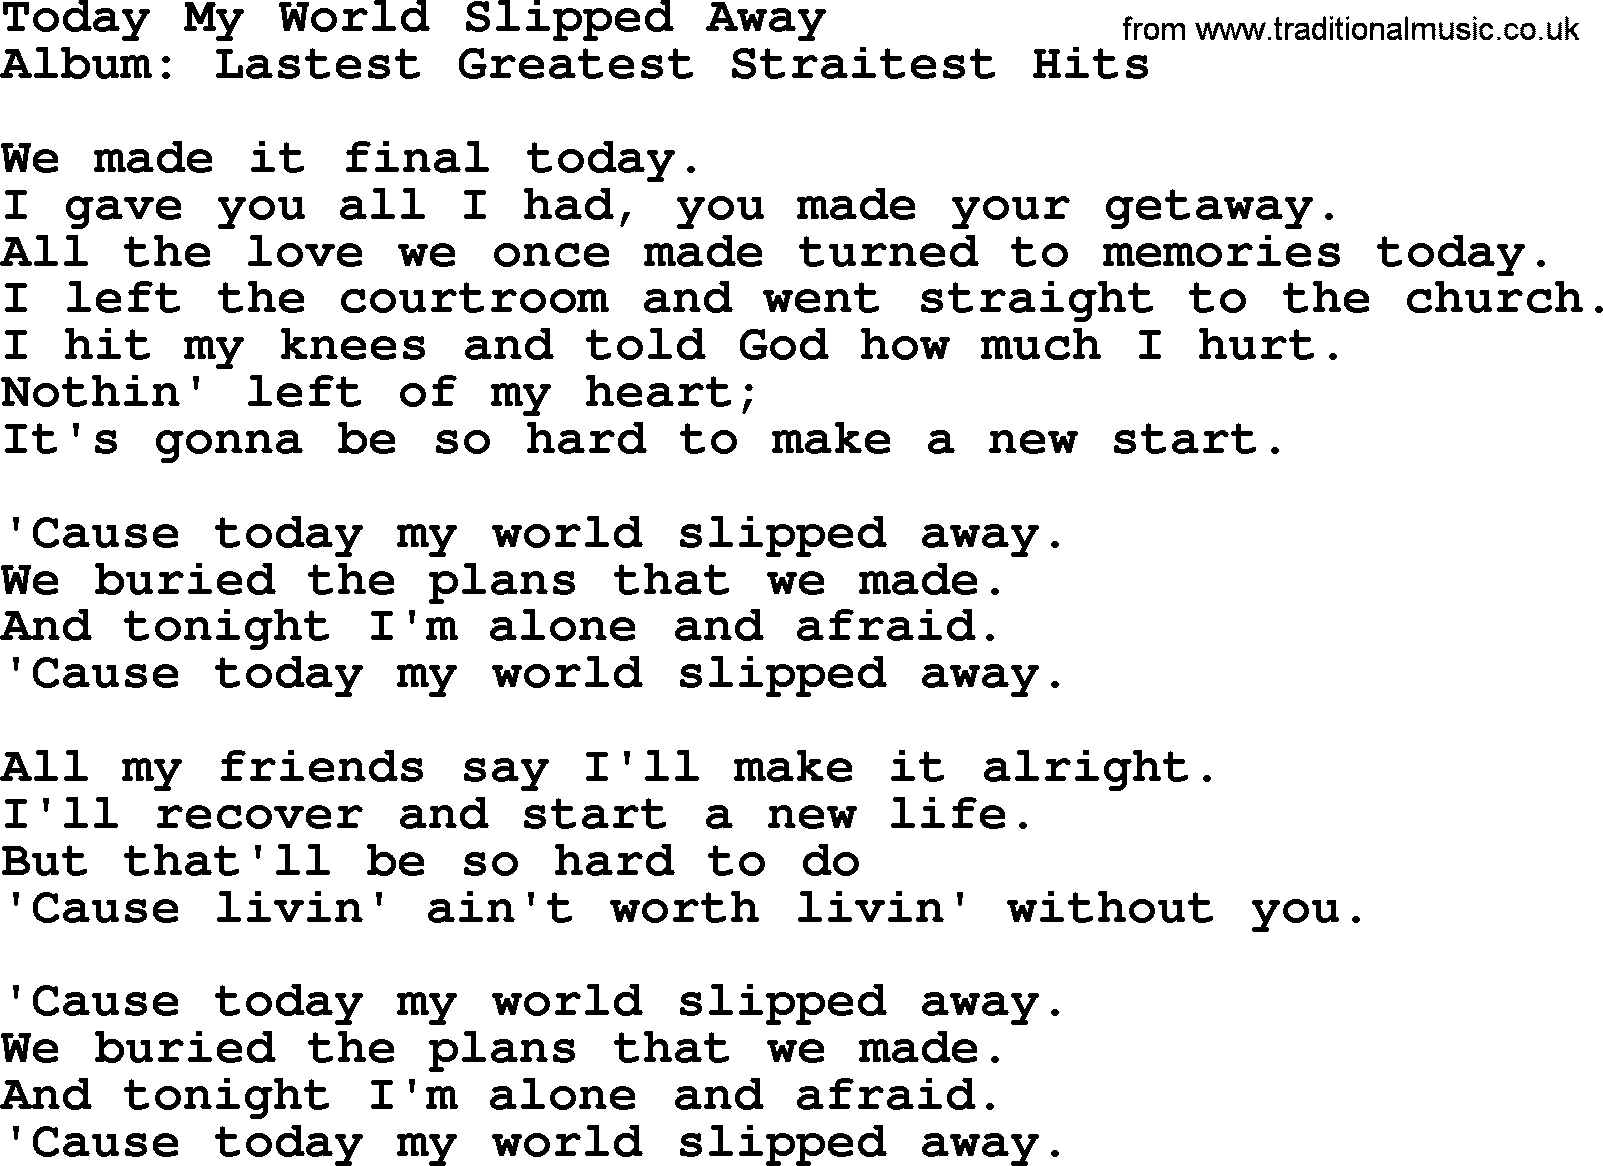 George Strait song: Today My World Slipped Away, lyrics